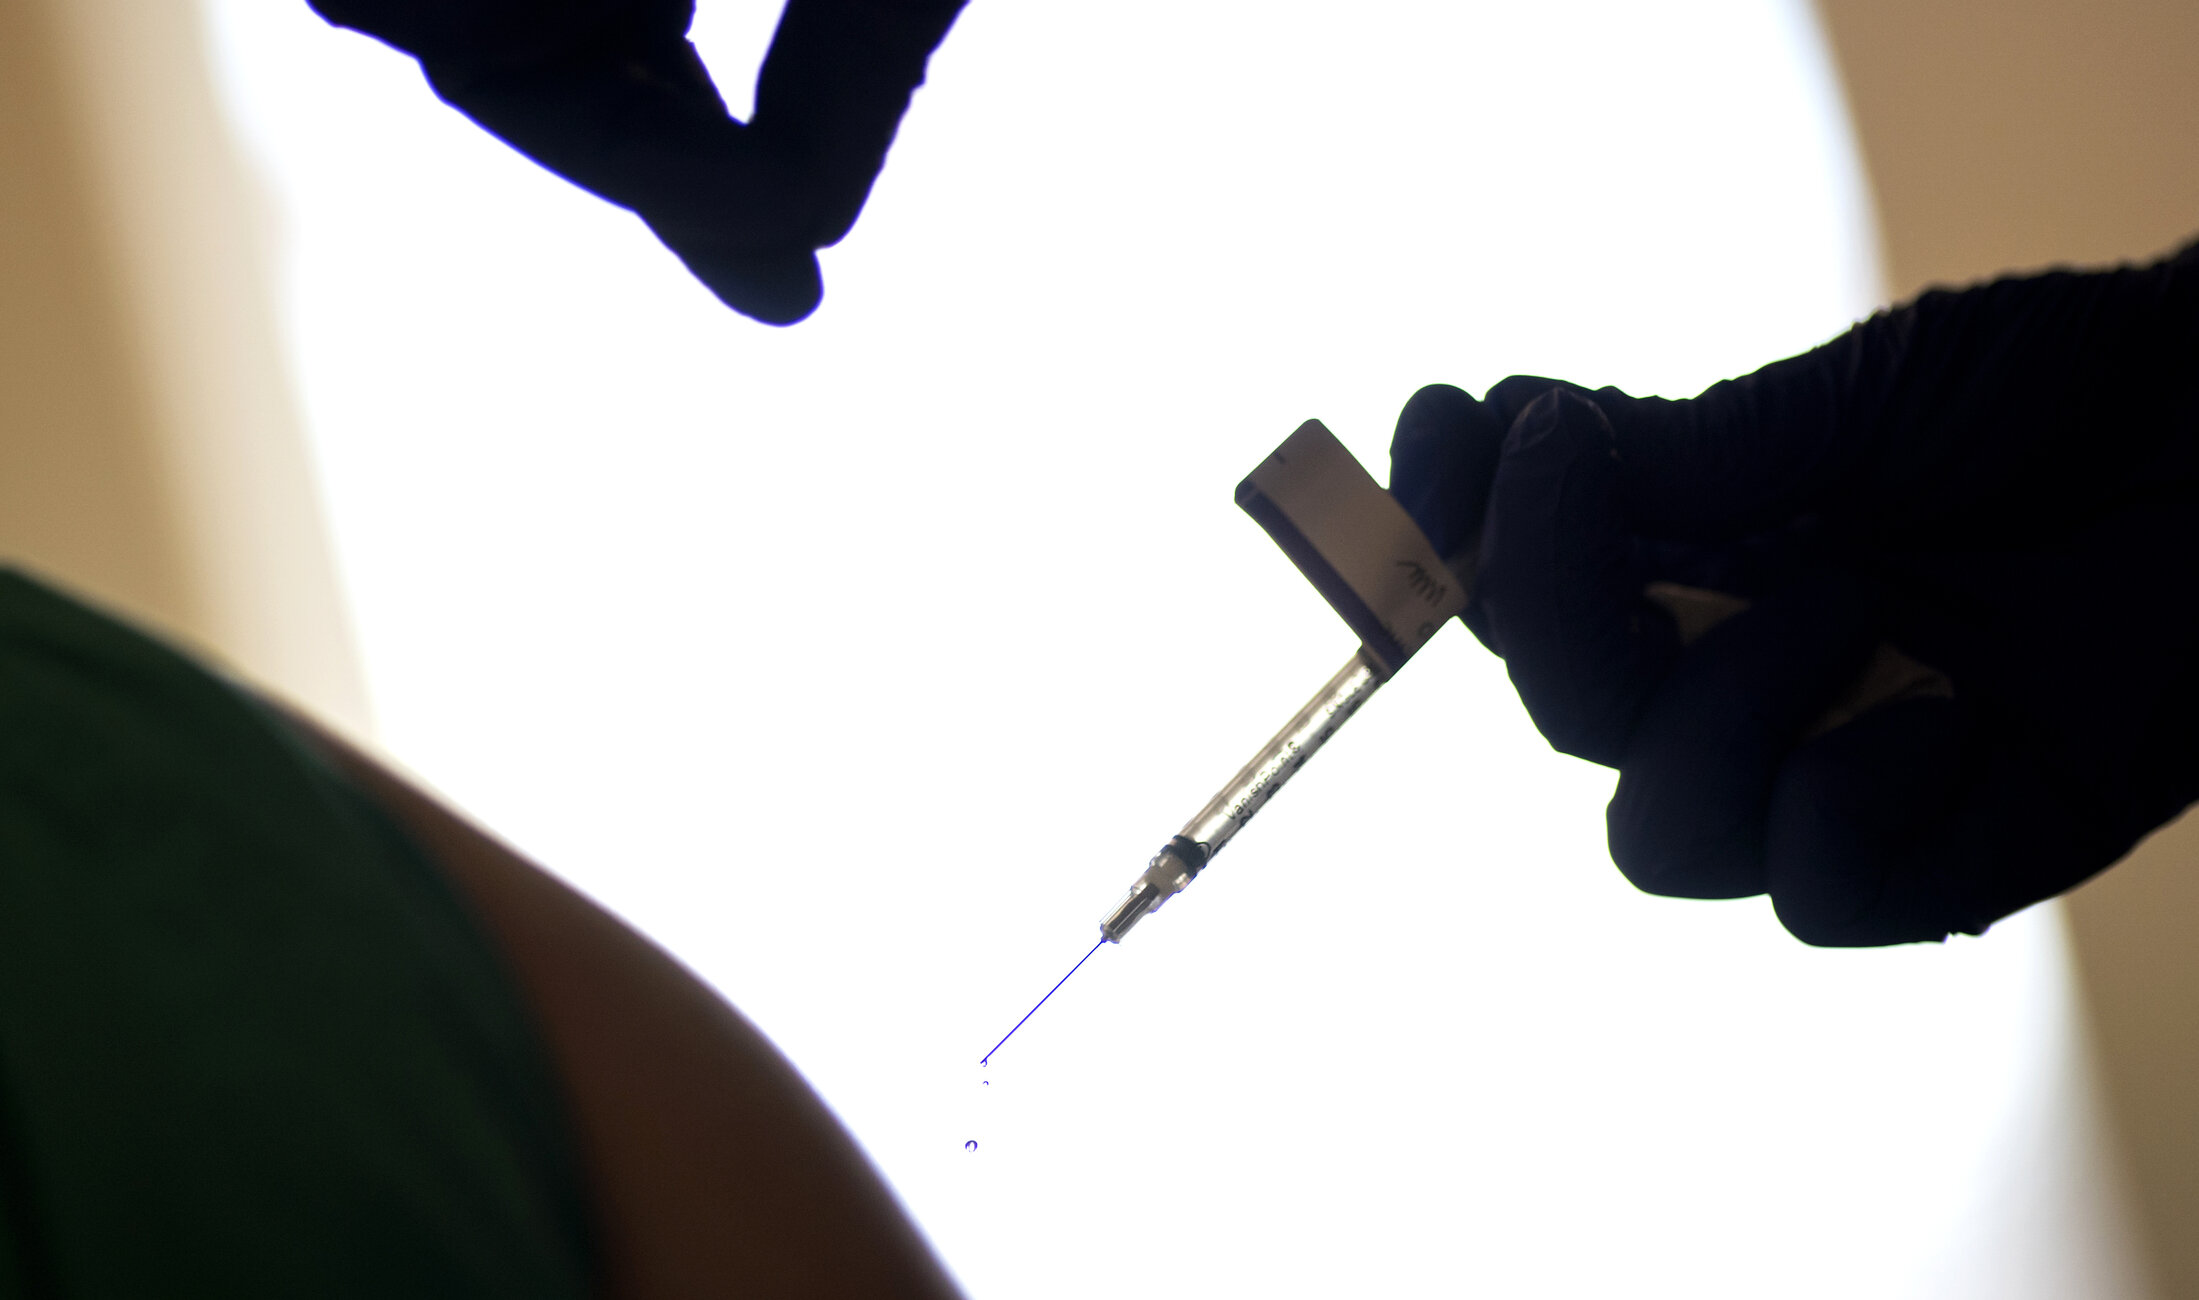 A treia doză de vaccin ar putea provoca reacții adverse grave